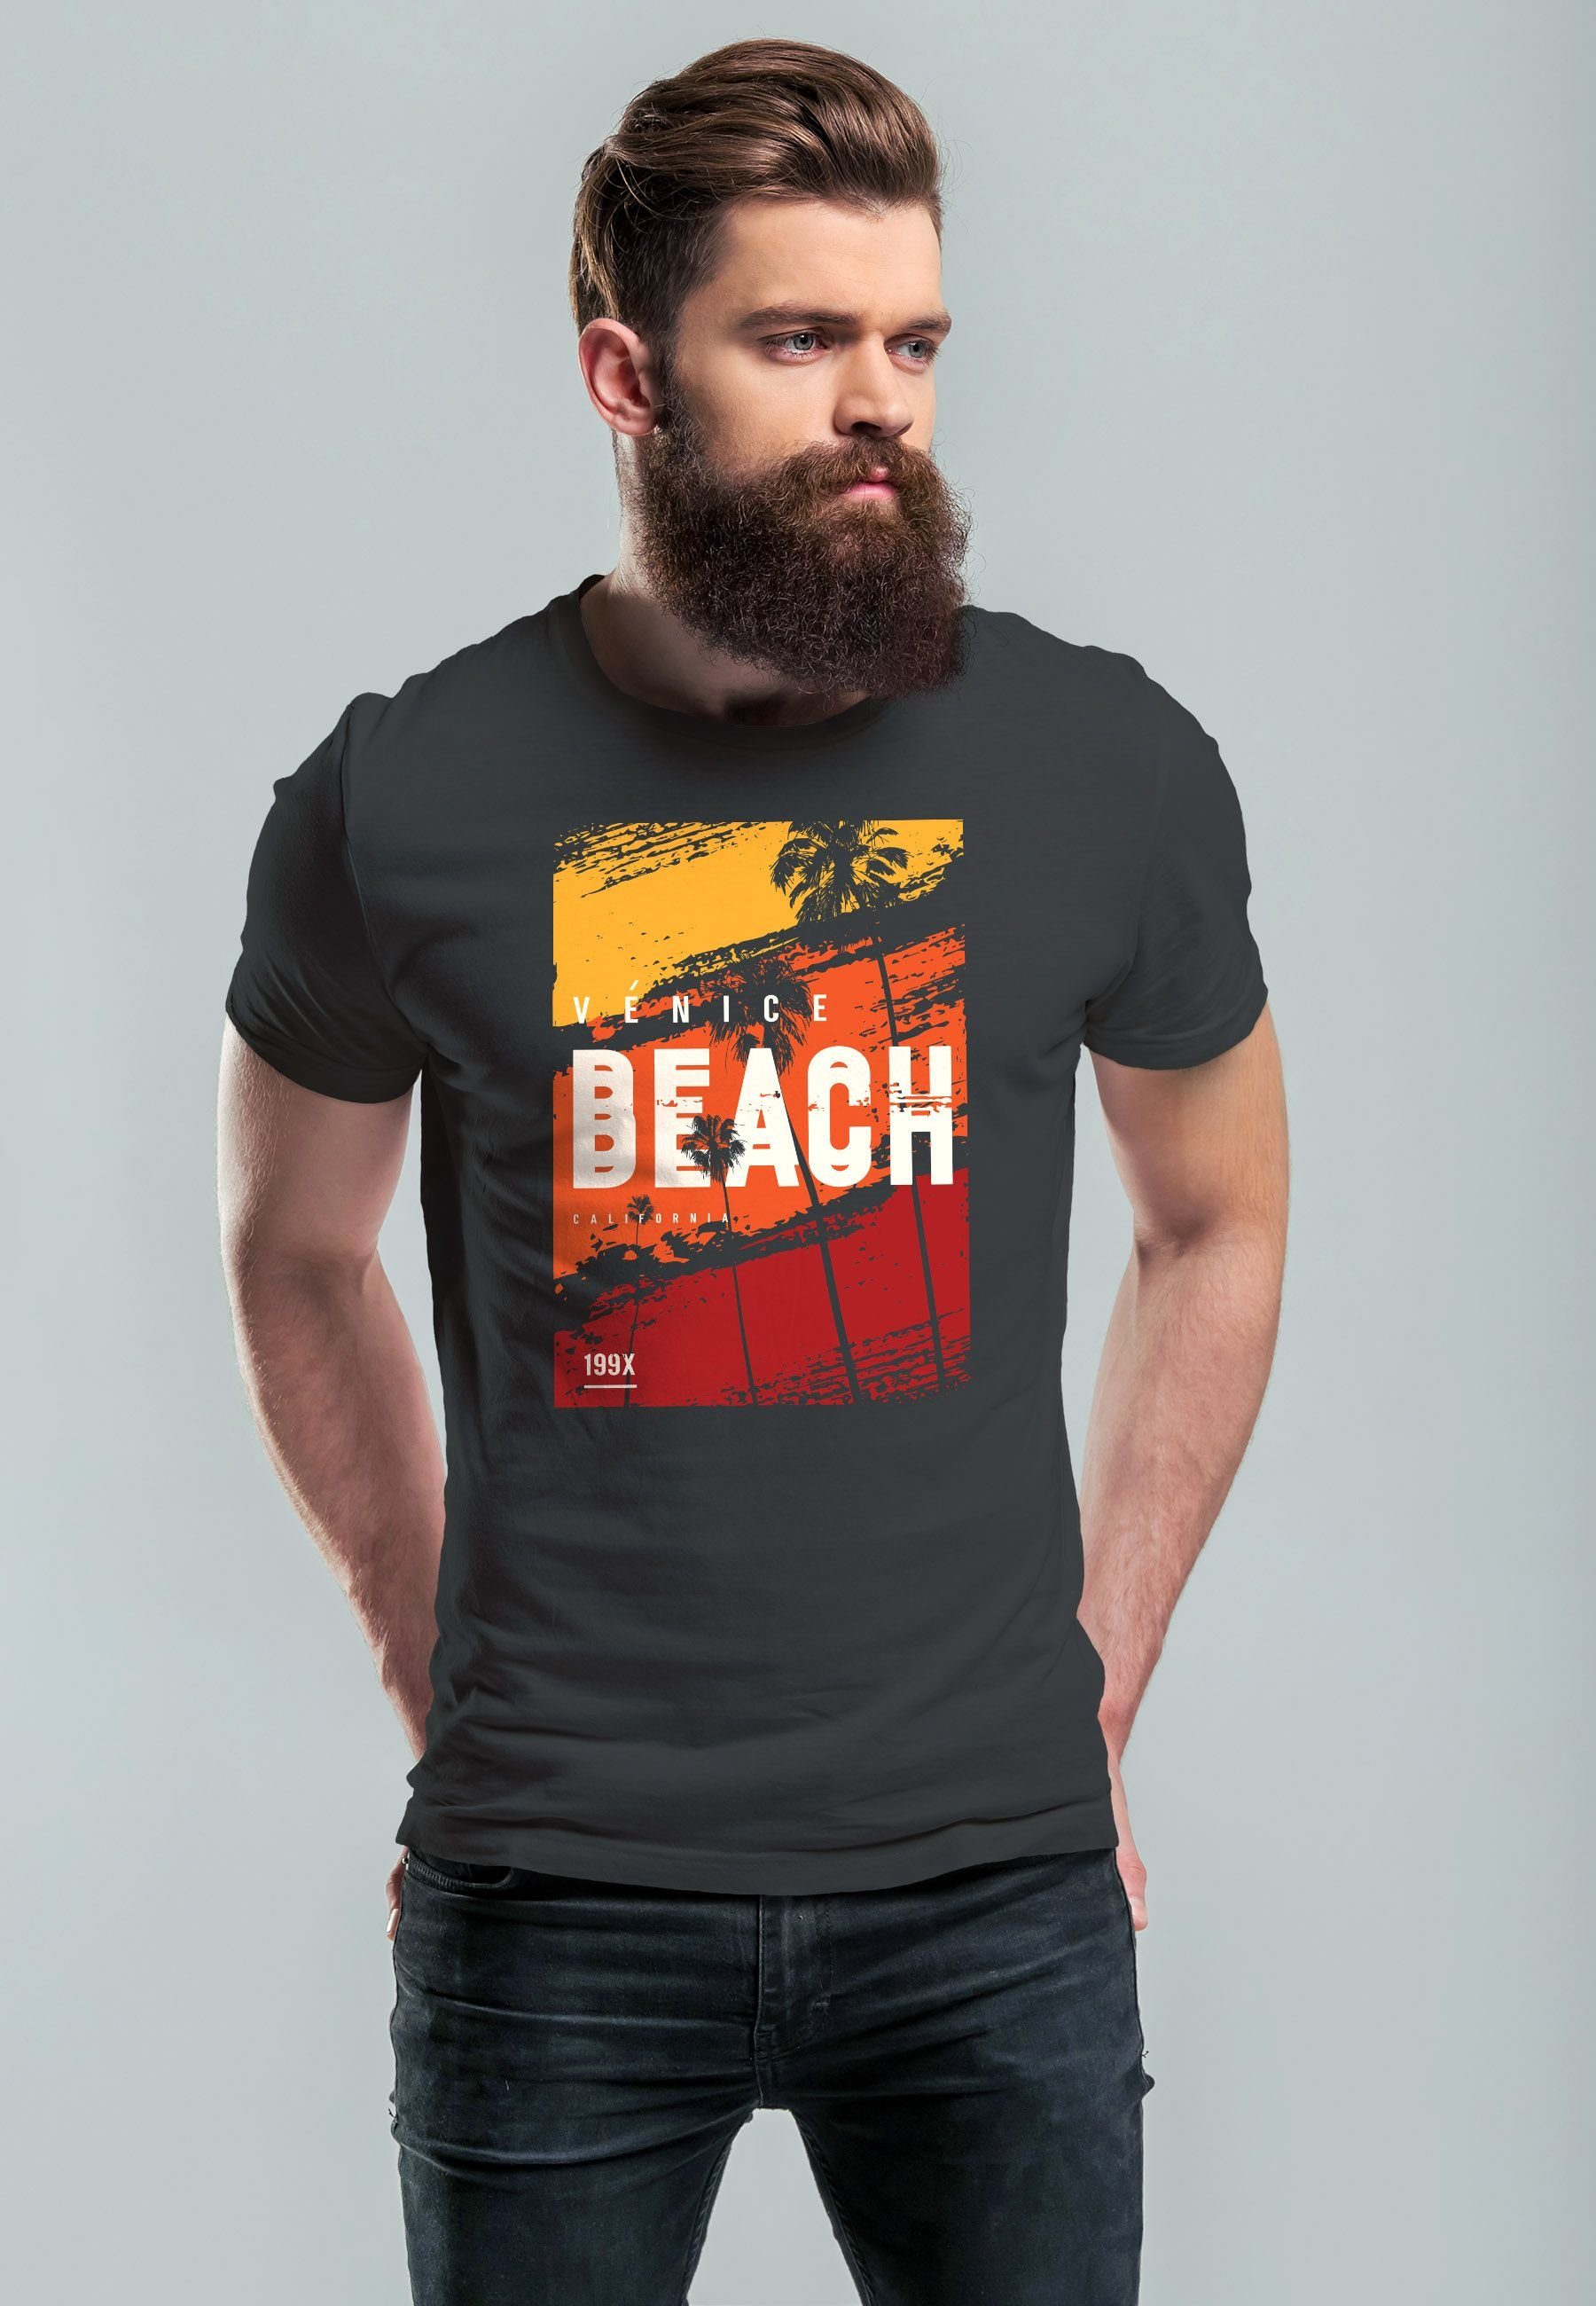 Neverless Print-Shirt Herren Motiv Sommer Print Venice mit Strand Beach Surfing Palme T-Shirt Aufdruck dunkelgrau